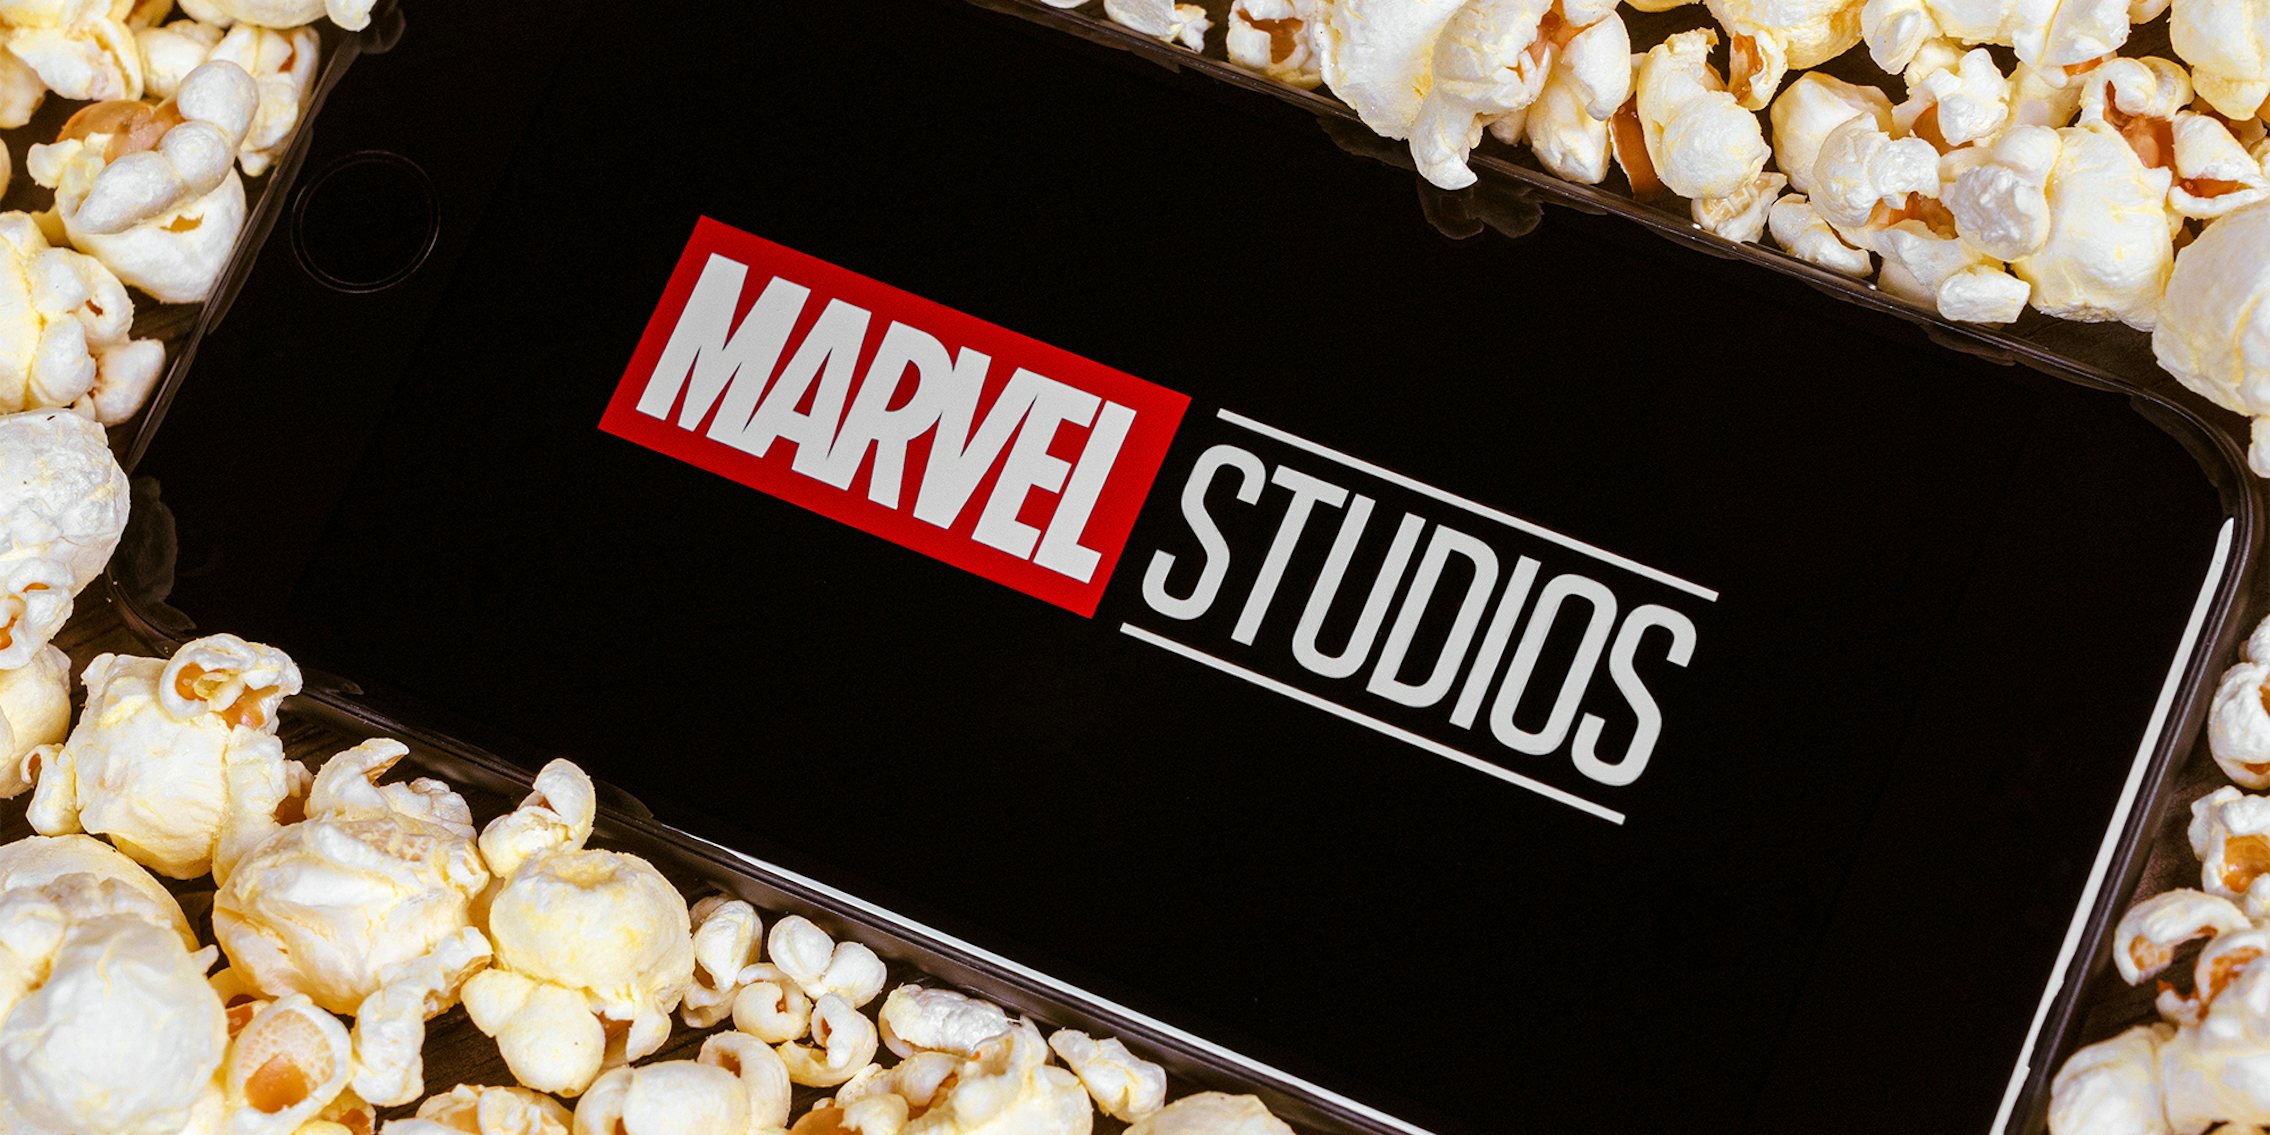 Marvel studios logo on smartphone screen.